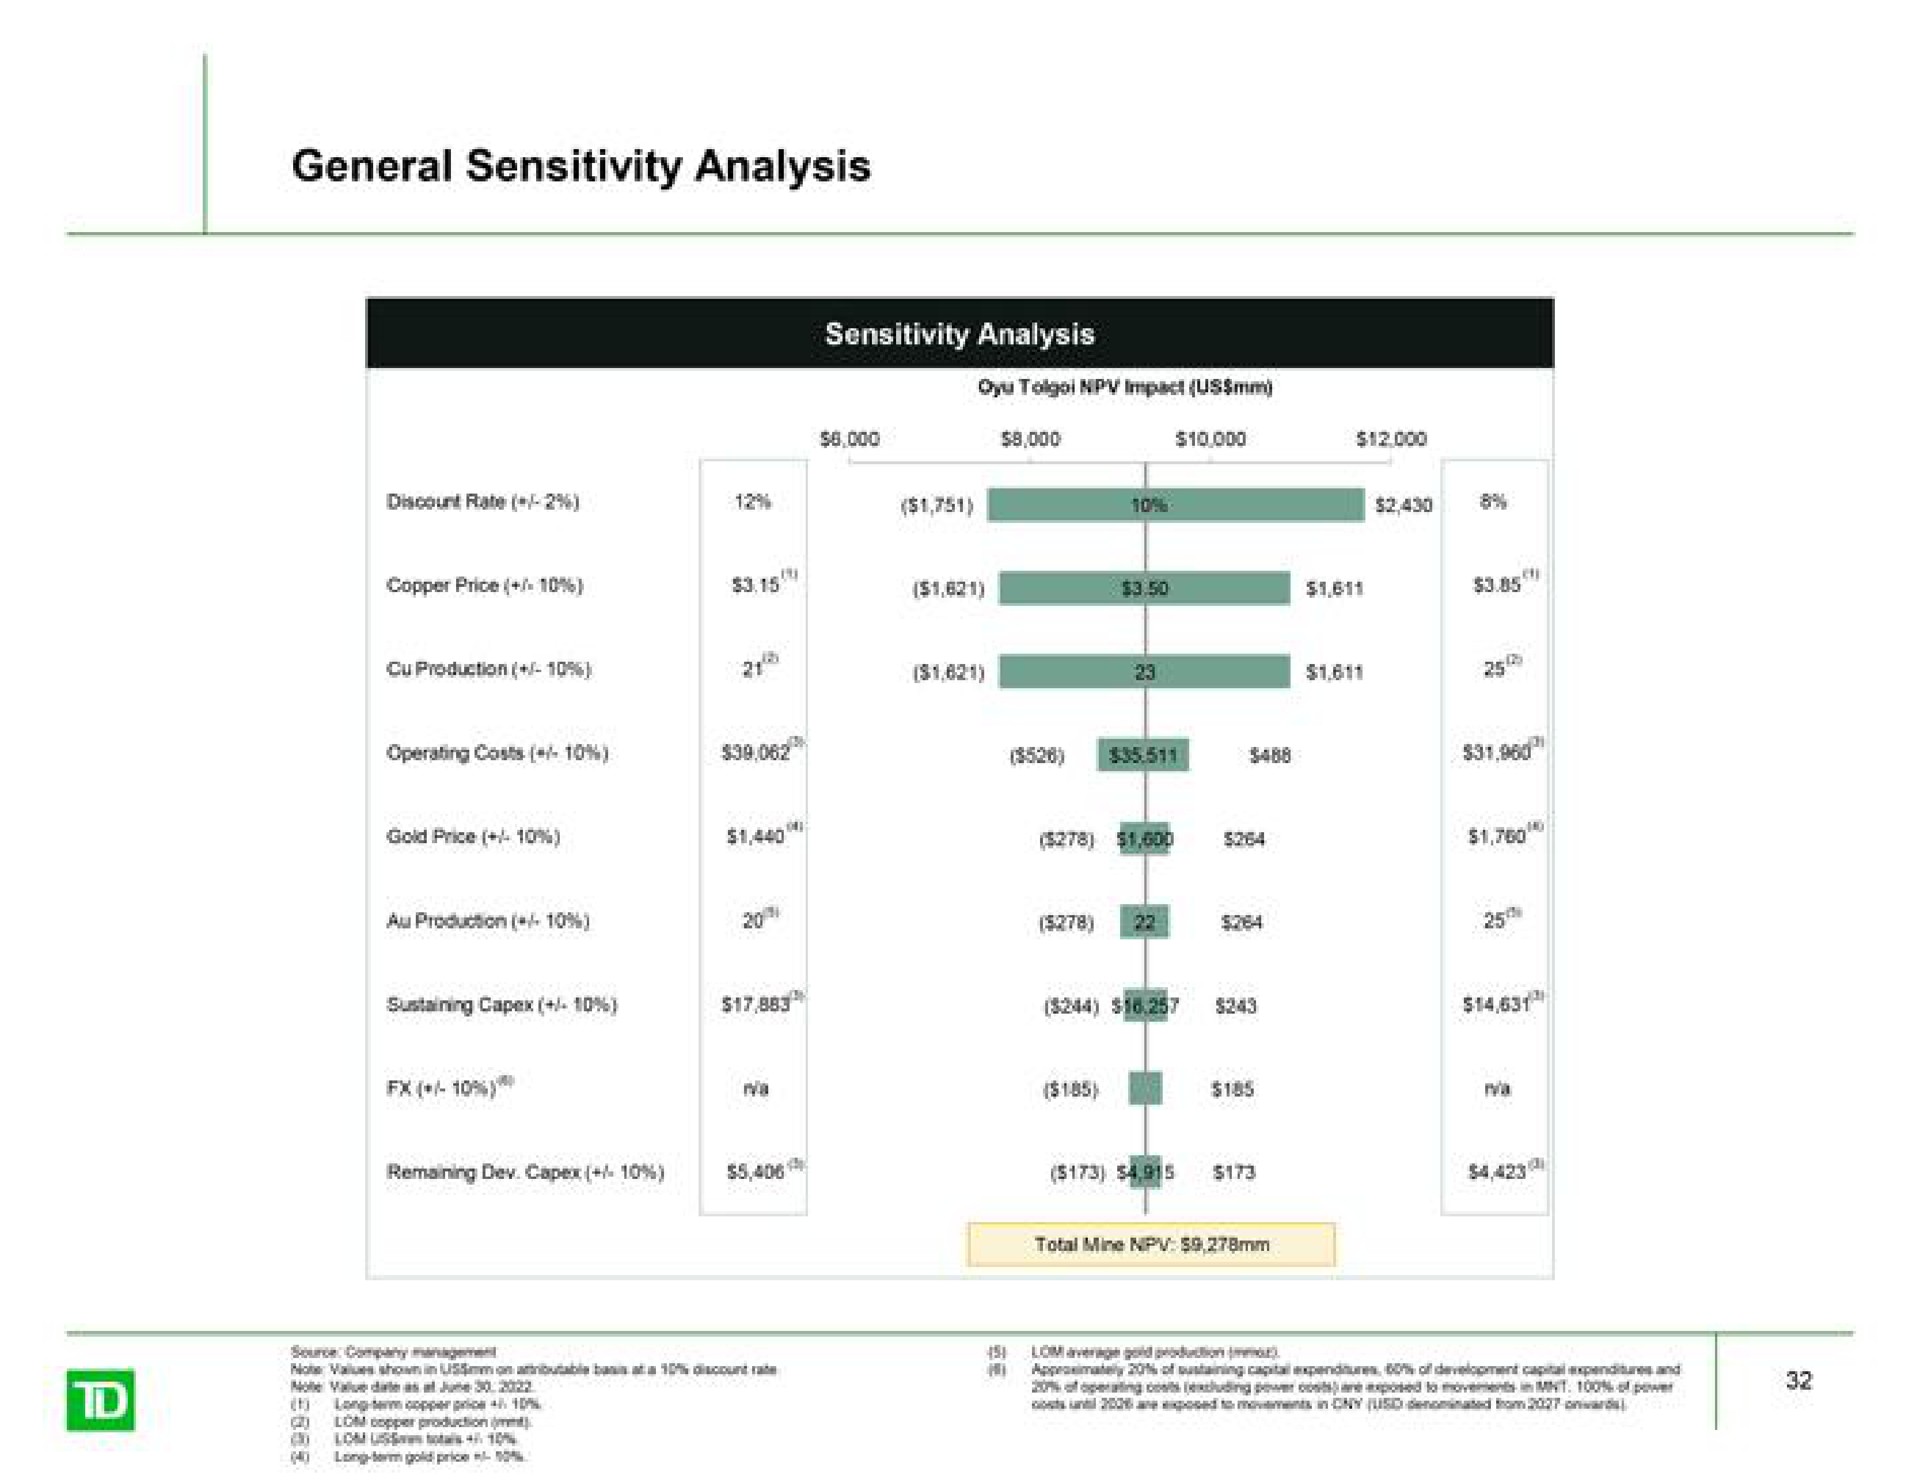 general sensitivity analysis | TD Securities